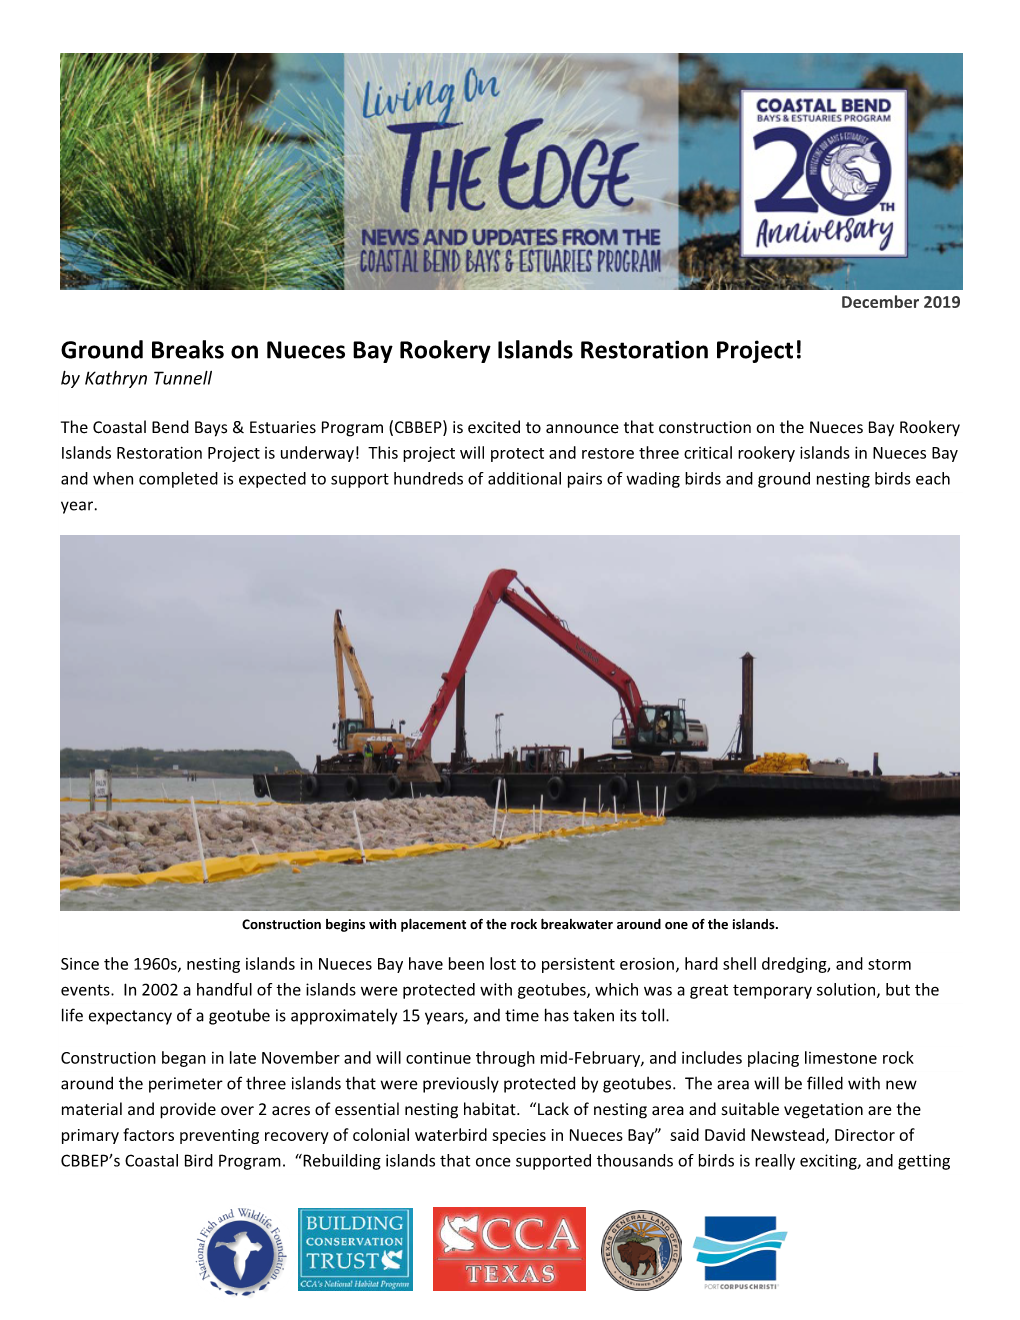 Ground Breaks on Nueces Bay Rookery Island Restoration